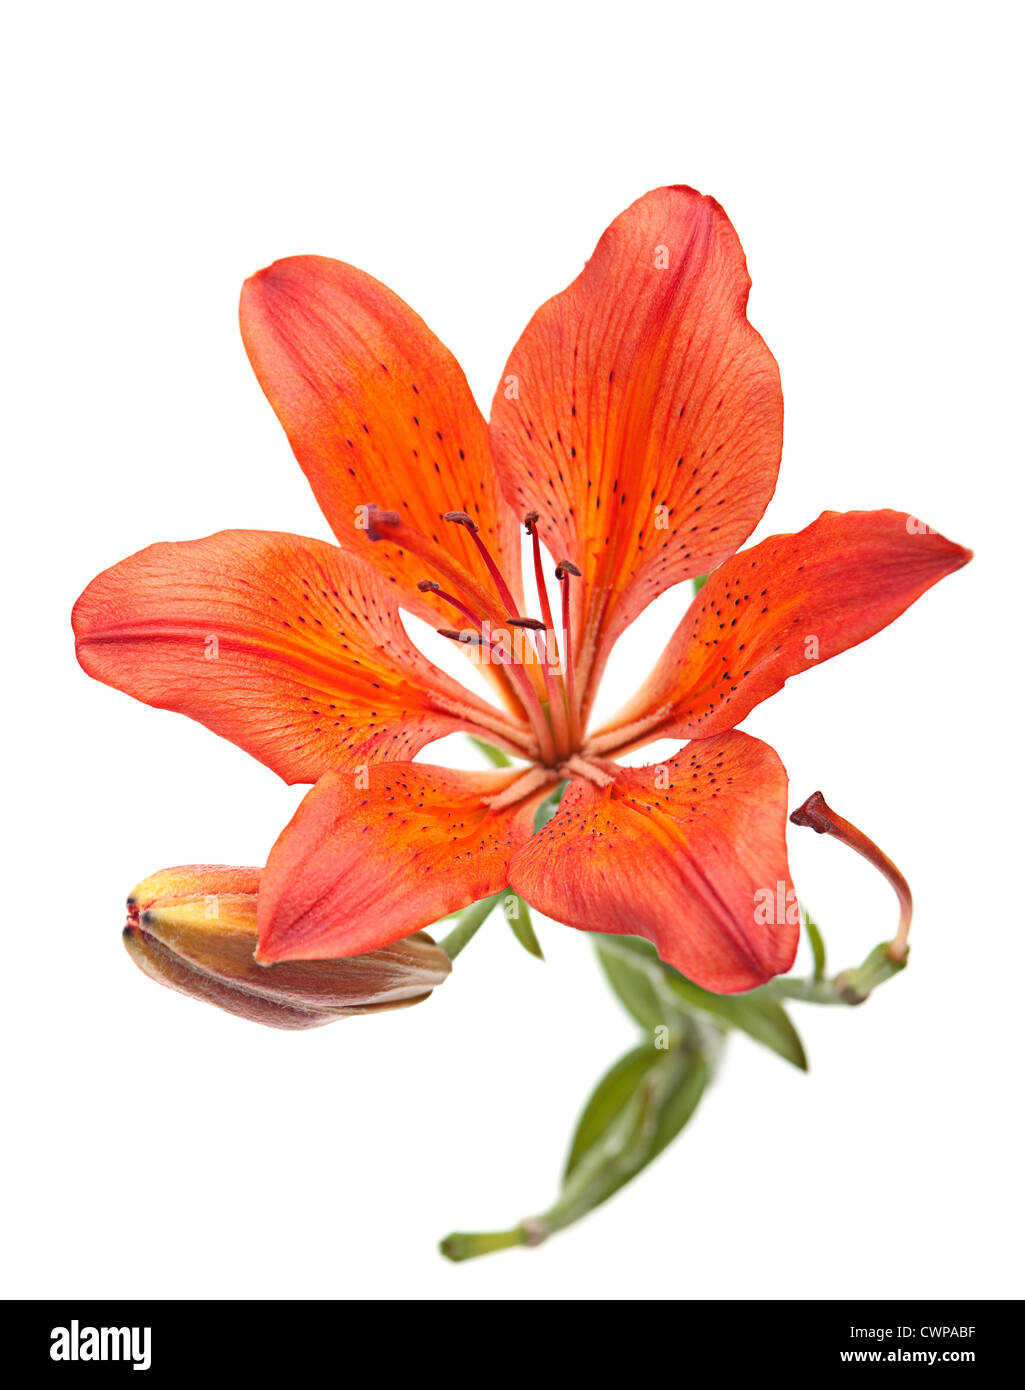 Rote Lilie Blume Closeup isoliert auf weiss Stockfoto